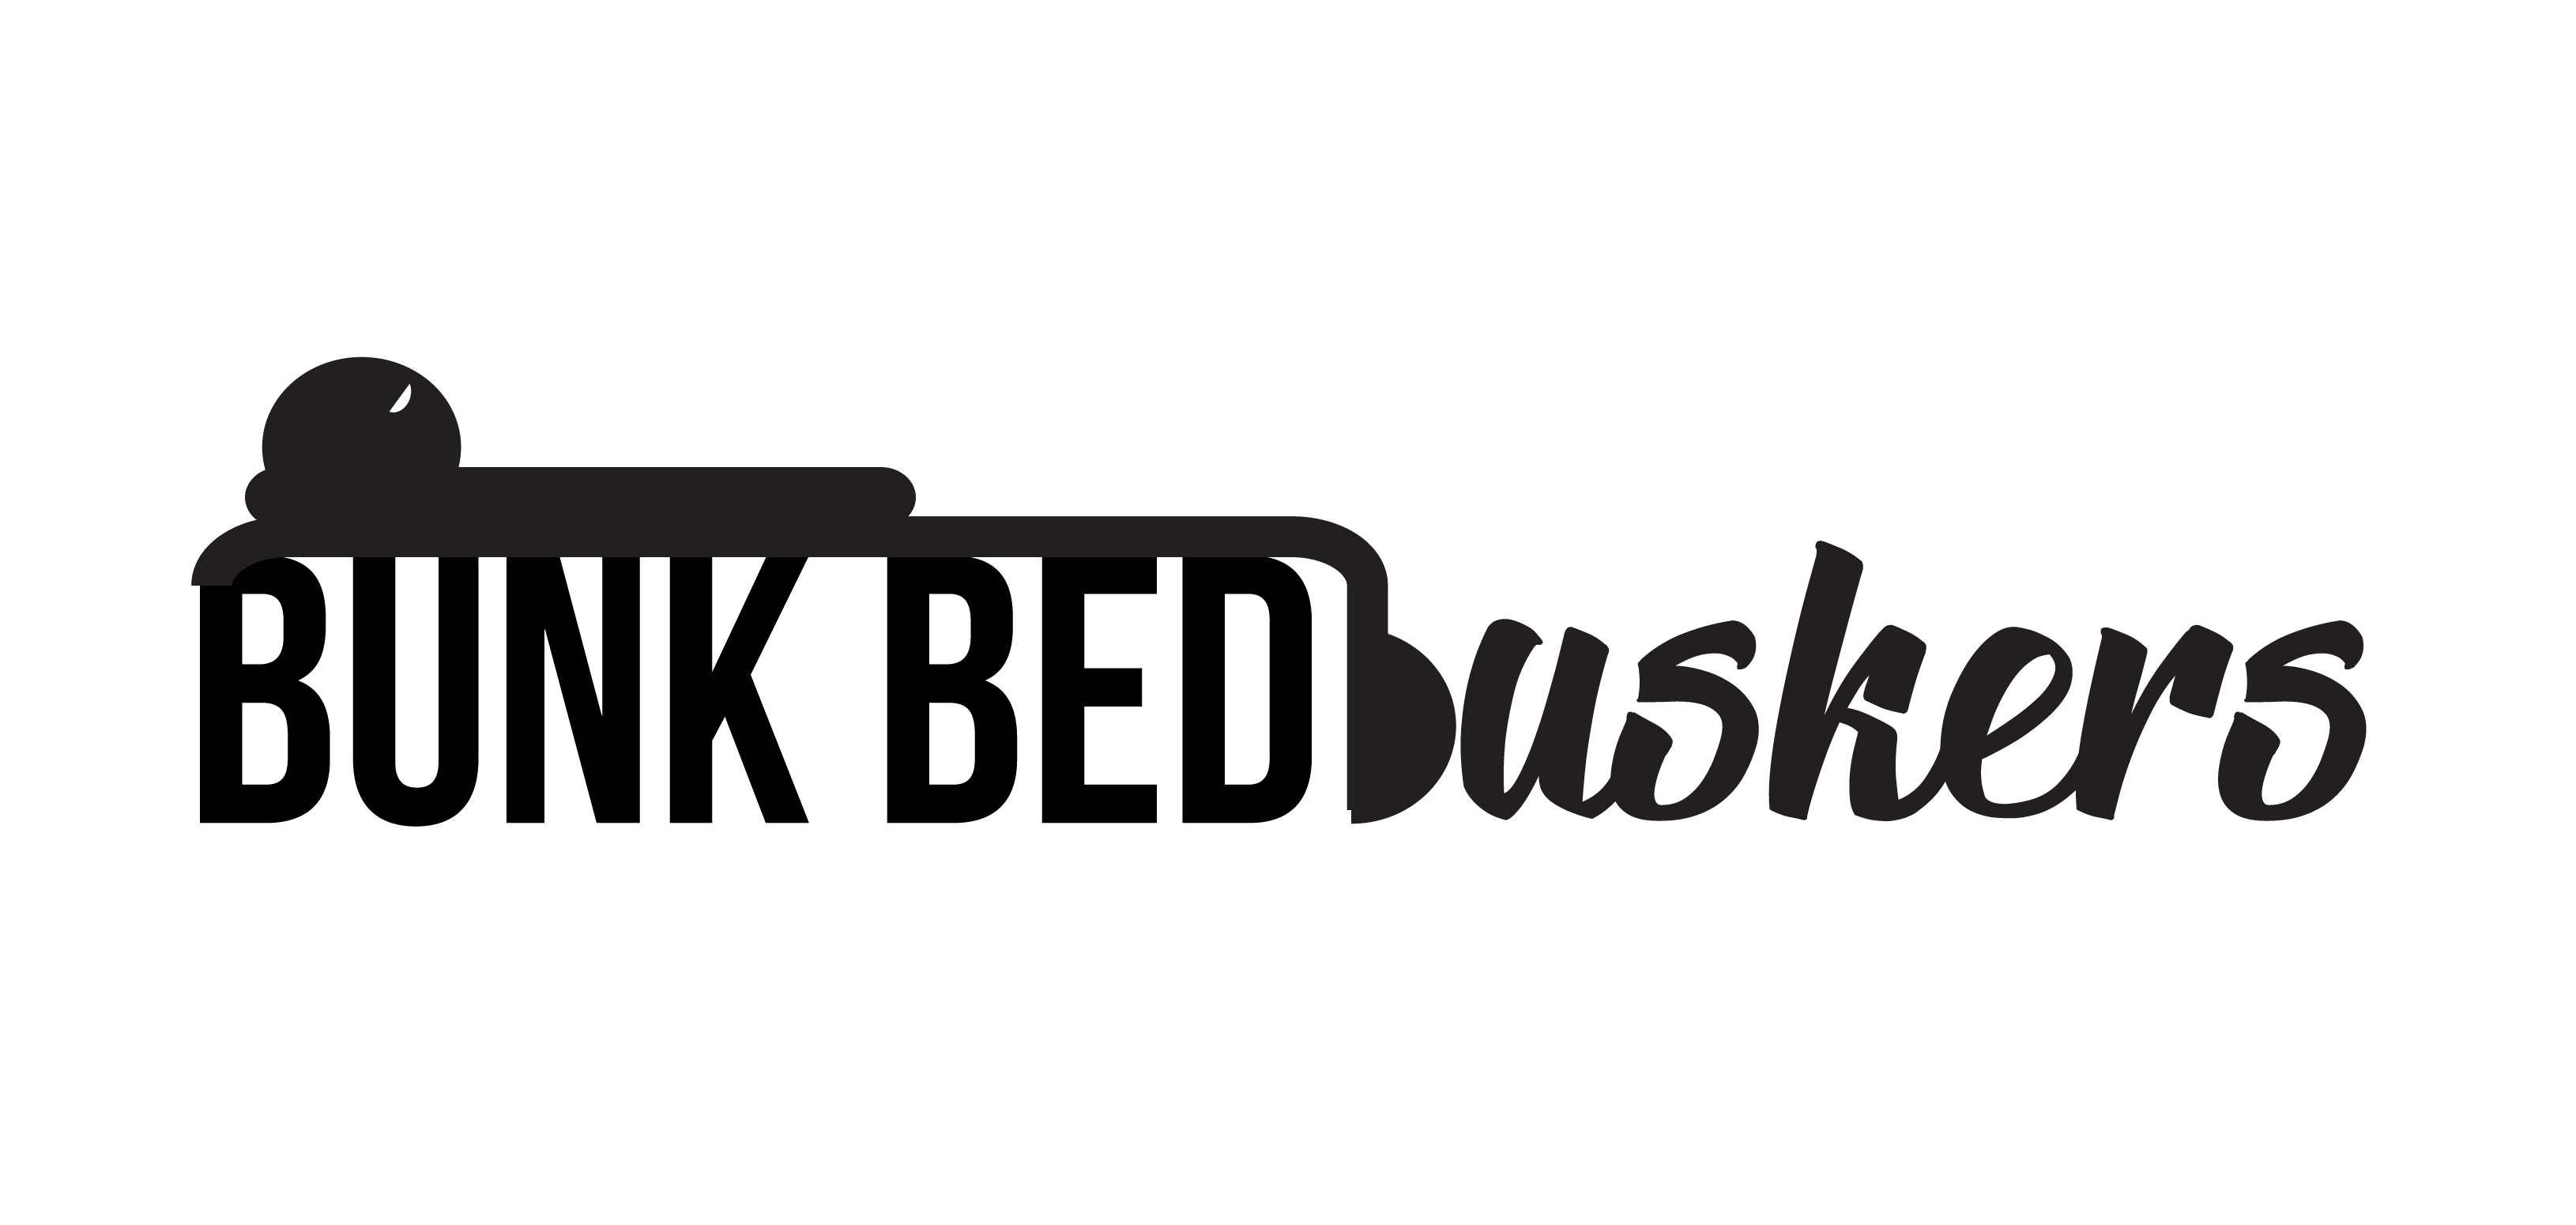 bunkbedbuskers-01